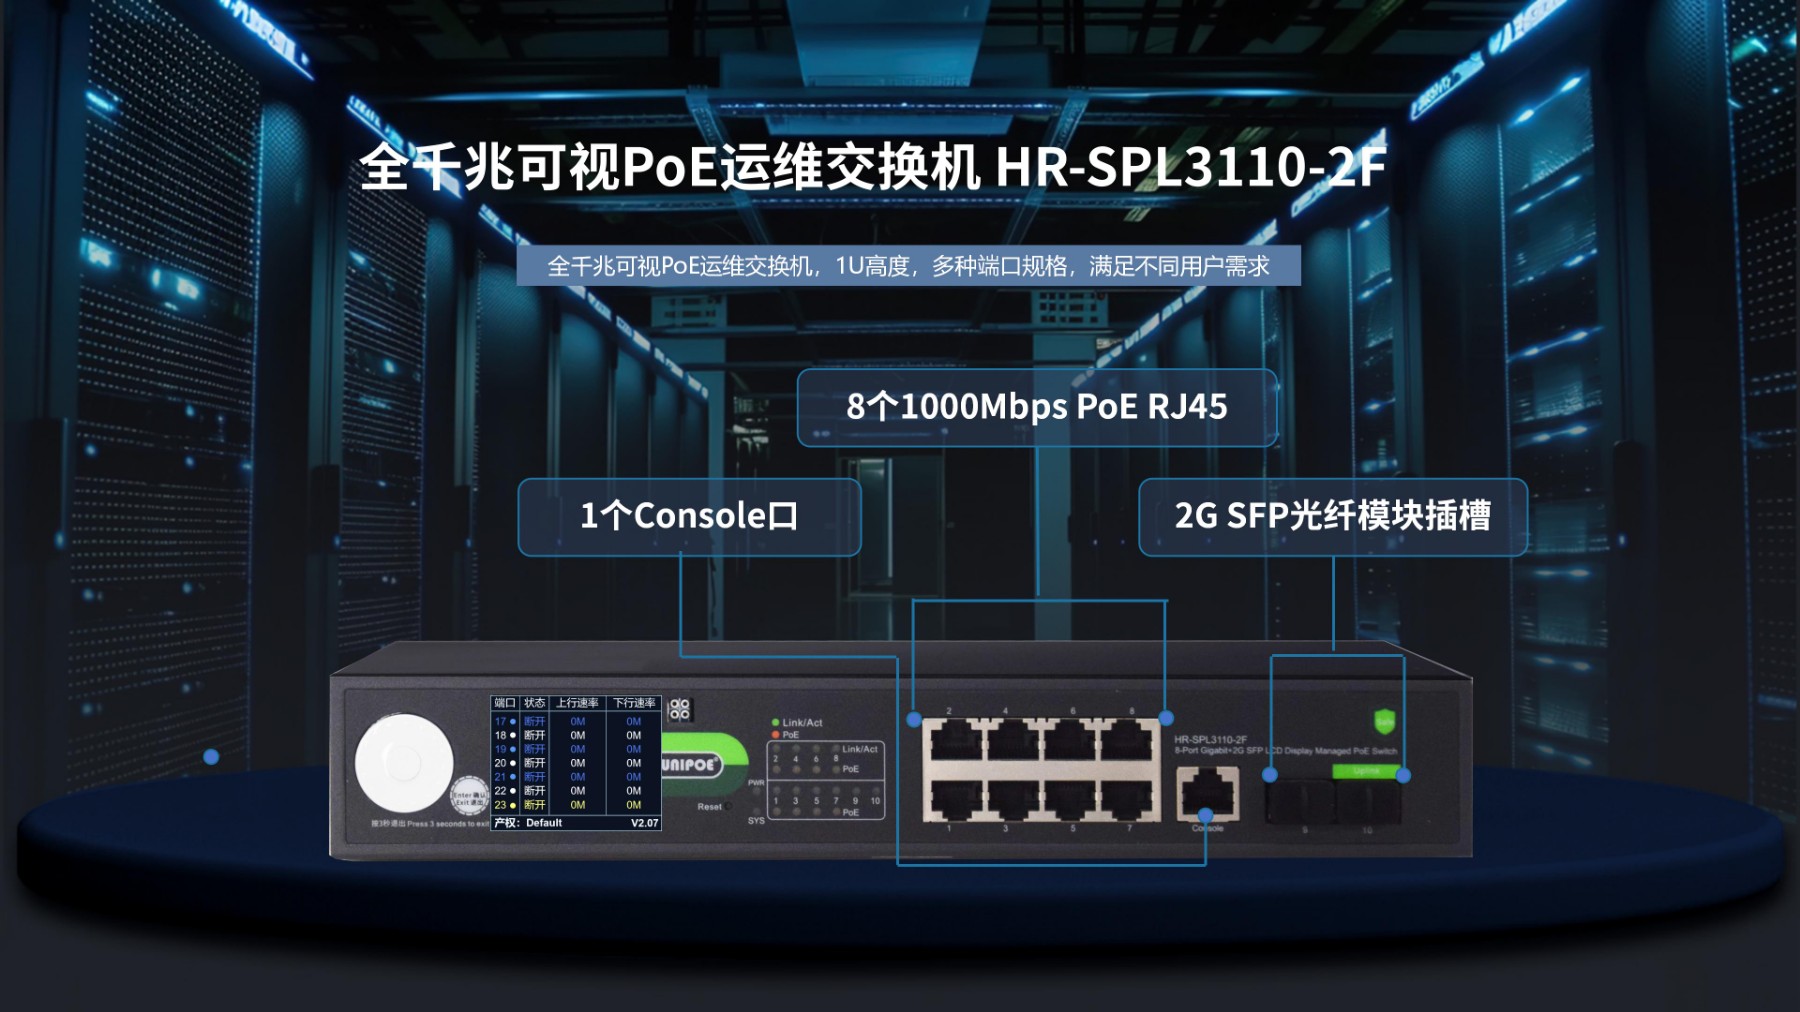 HR-SPL3110-2F可视交换机官网PPT_01.jpg